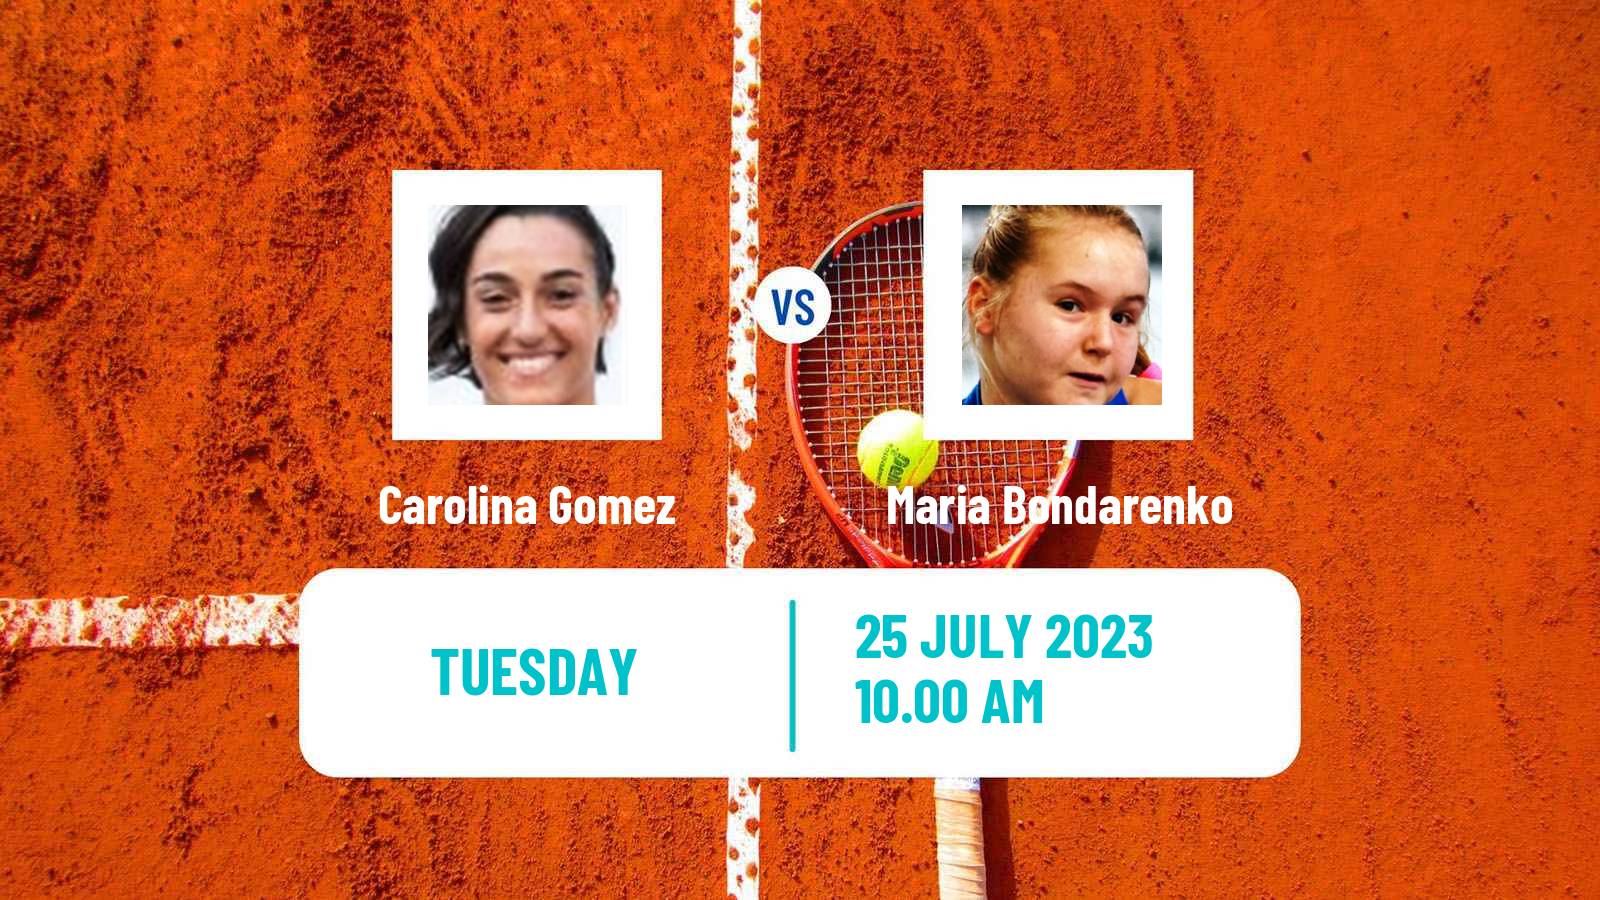 Tennis ITF W25 El Espinar Segovia Women Carolina Gomez - Maria Bondarenko